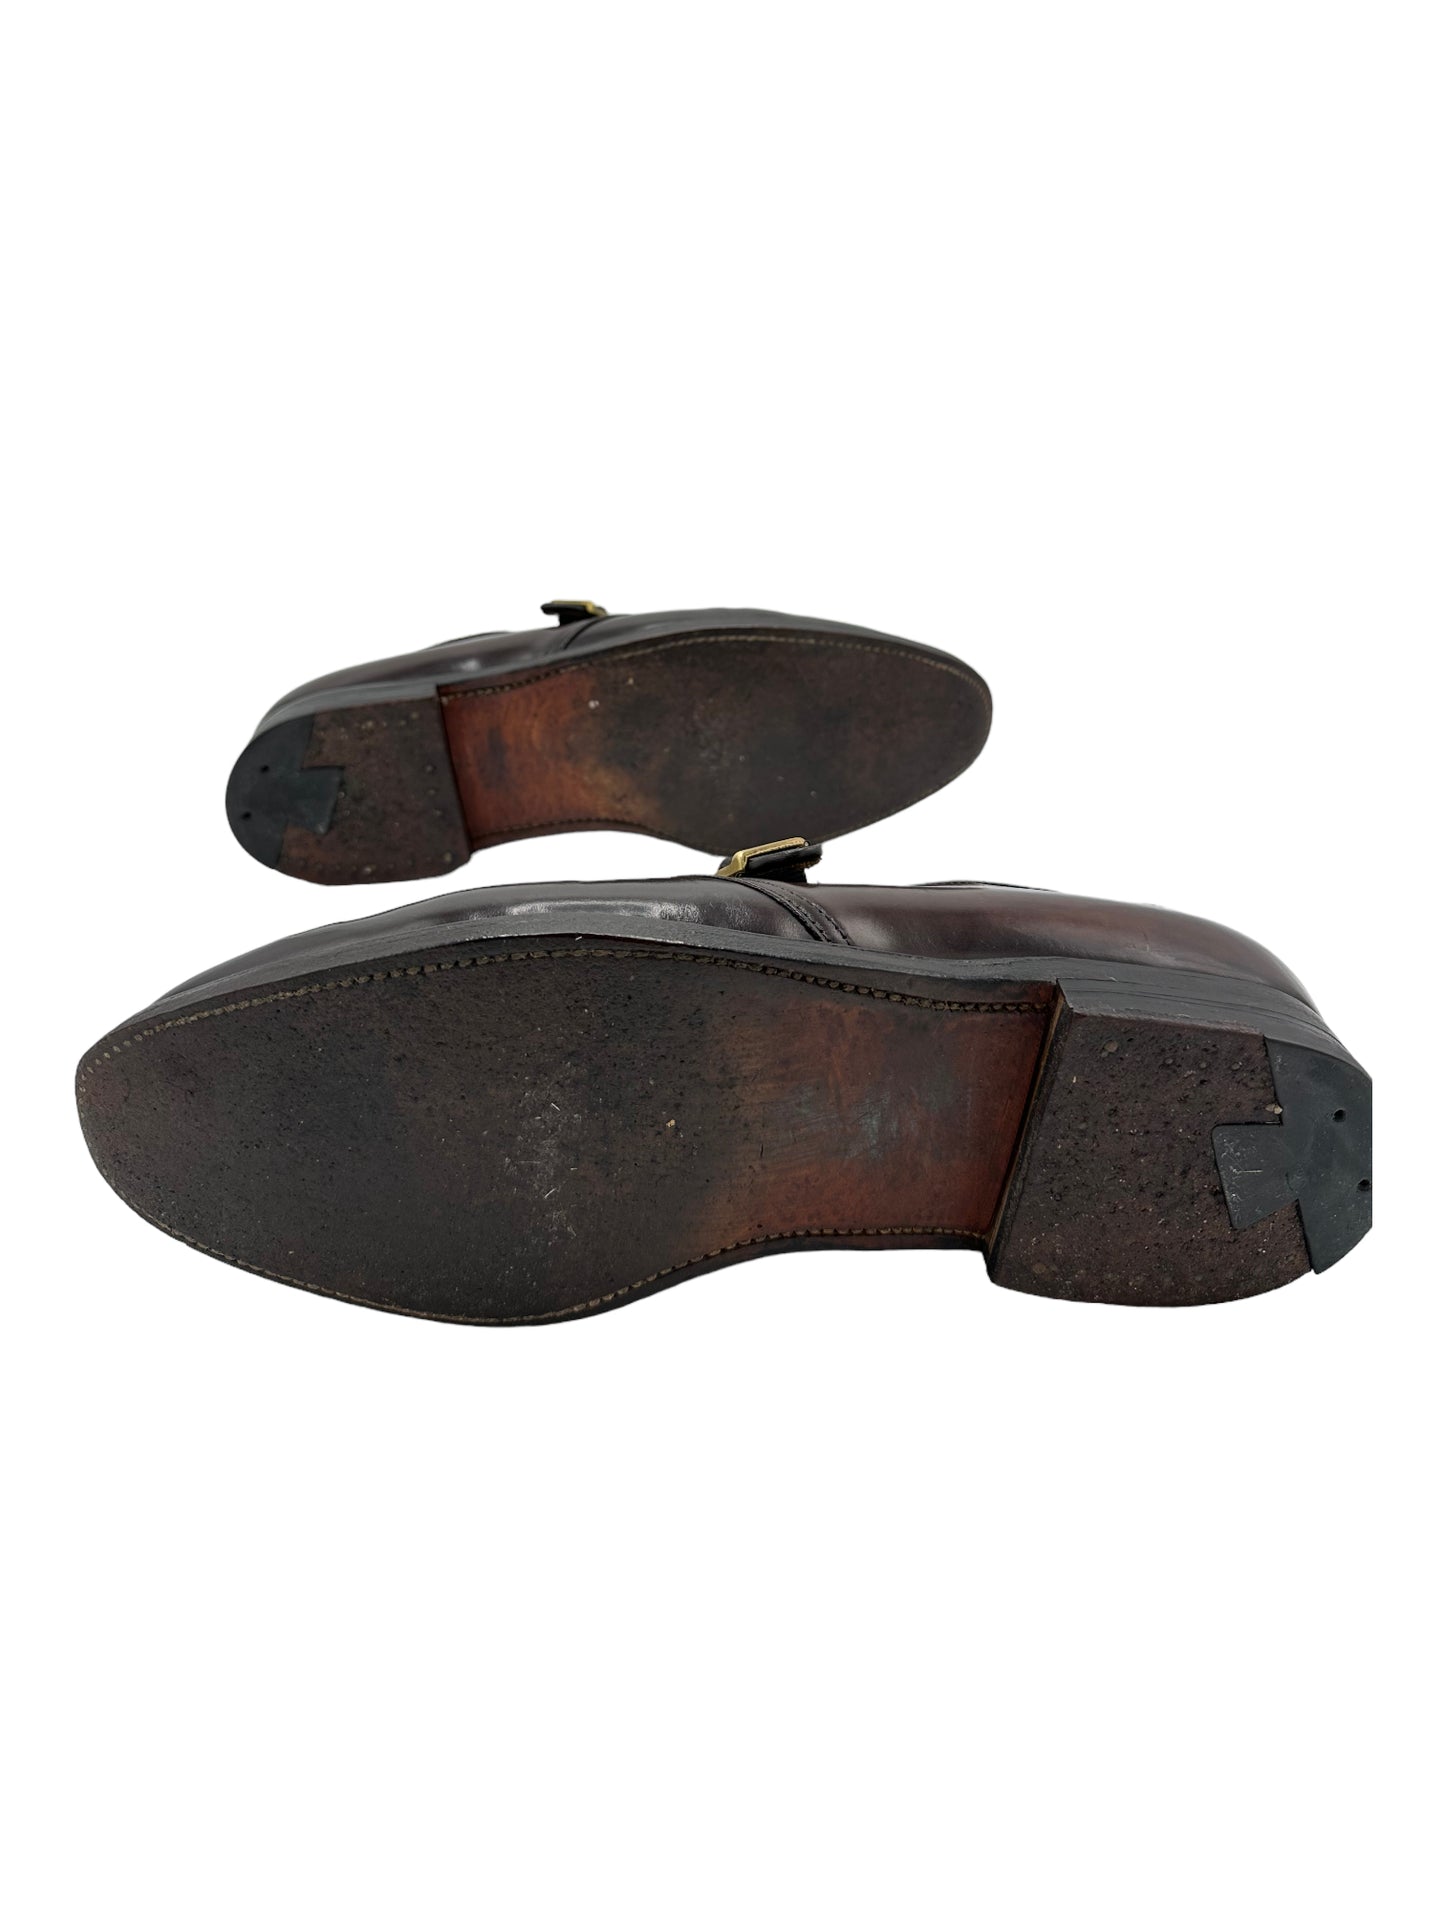 Alden 954 Monk Strap Burgundy Shell Cordovan Shoes